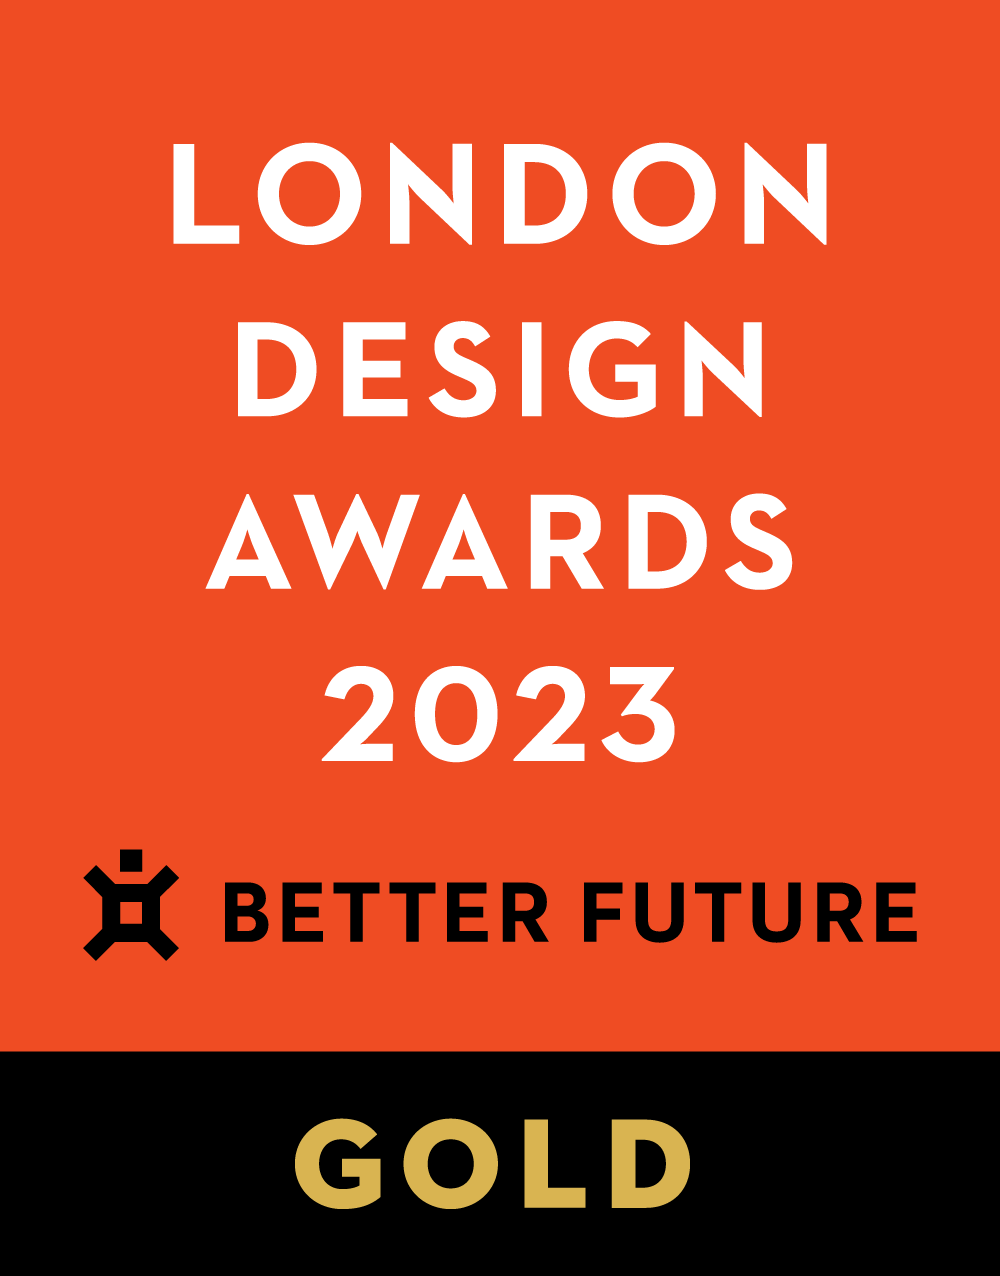 London Design Awards logo